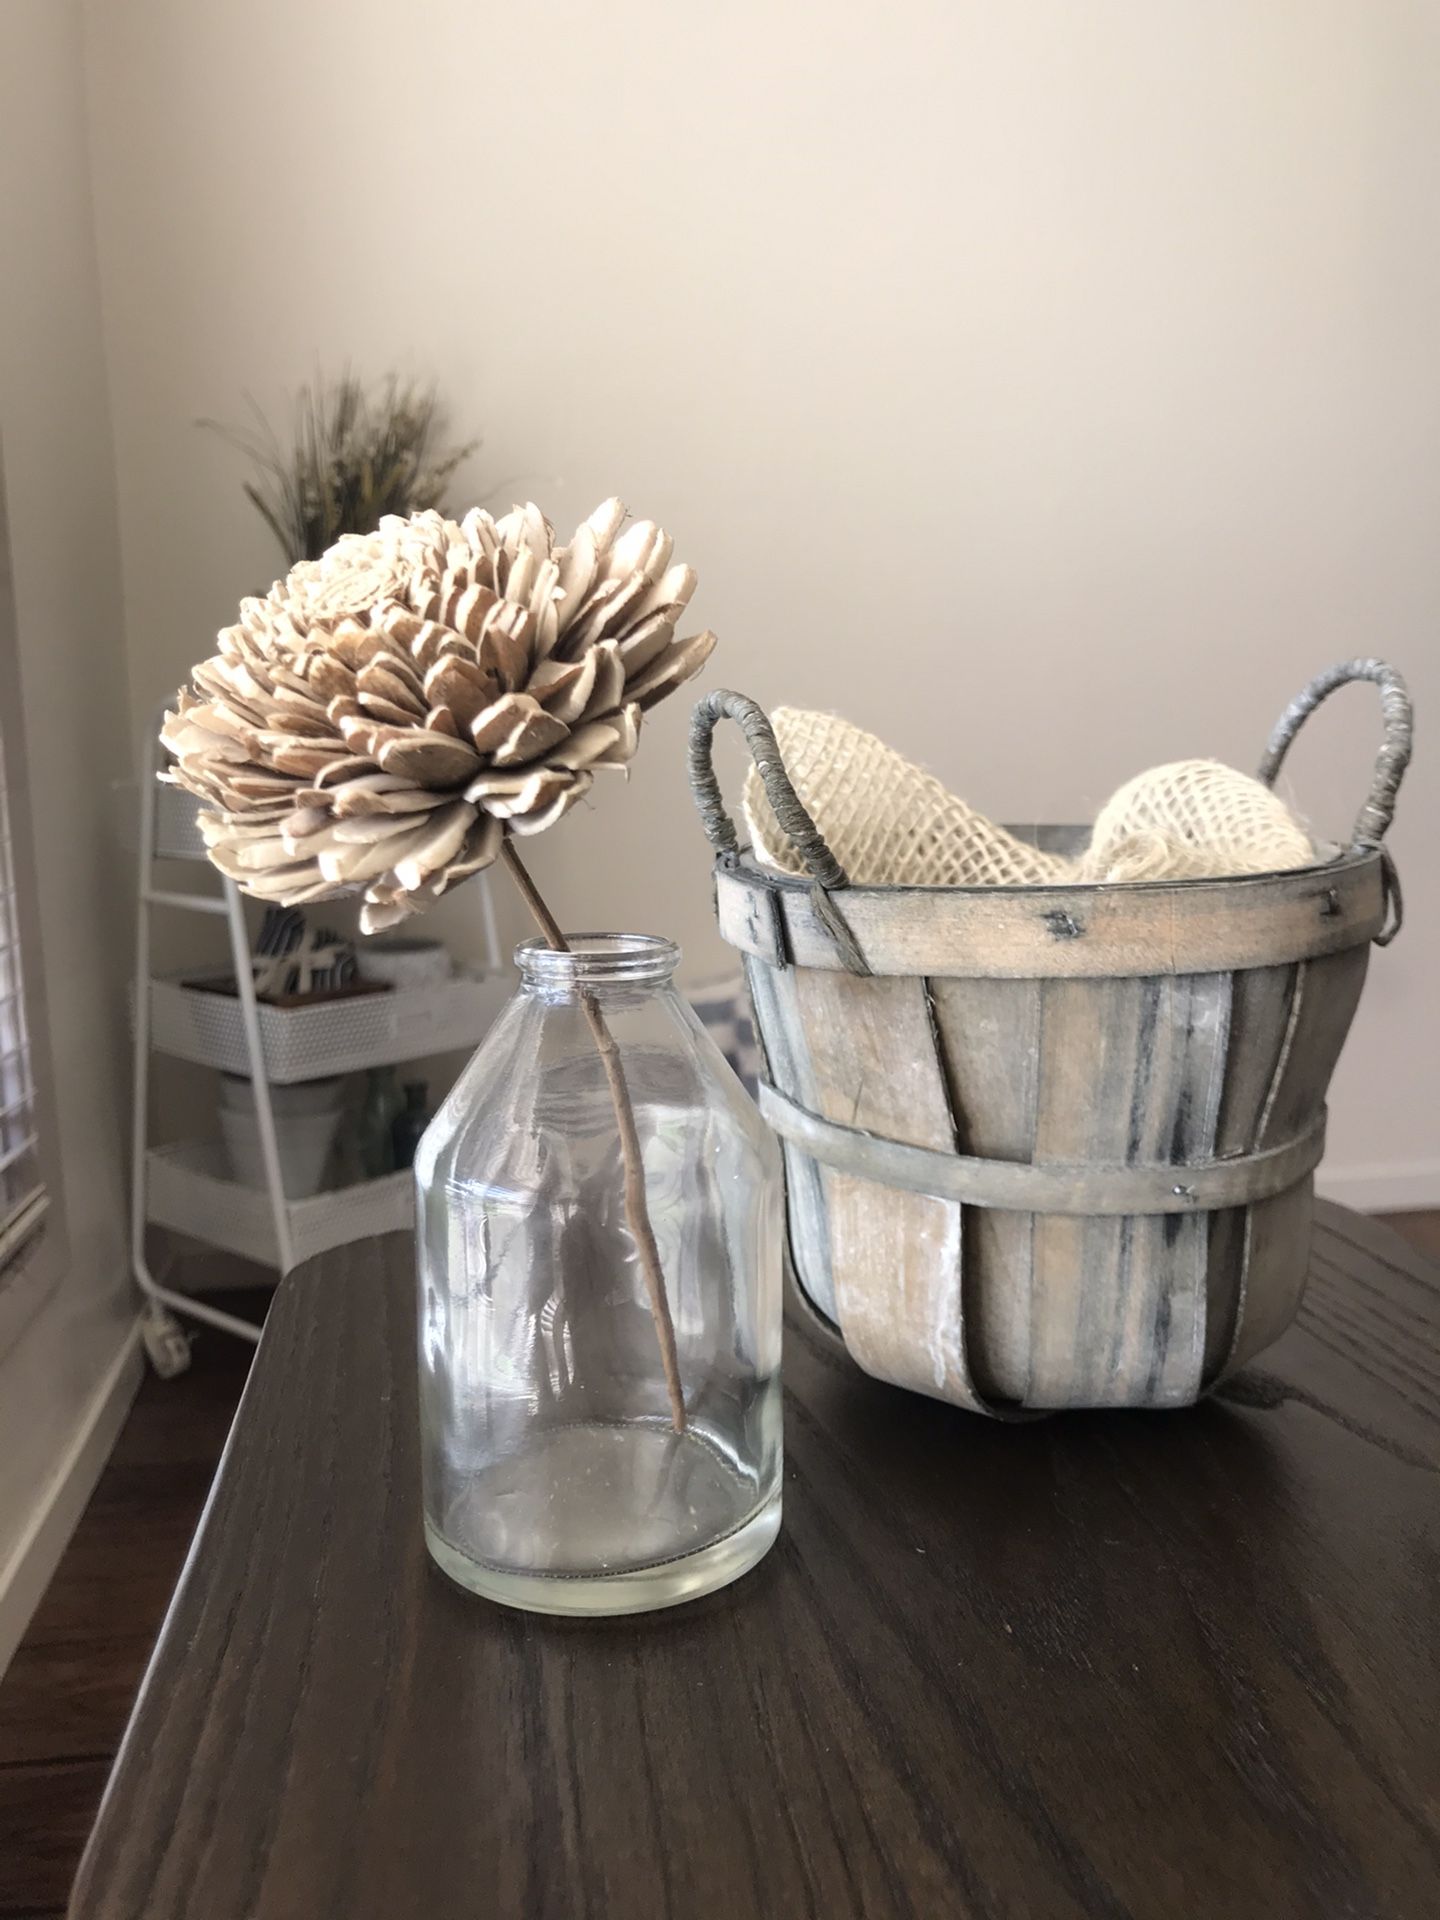 Basket with Wooden Flower & Glass Vase